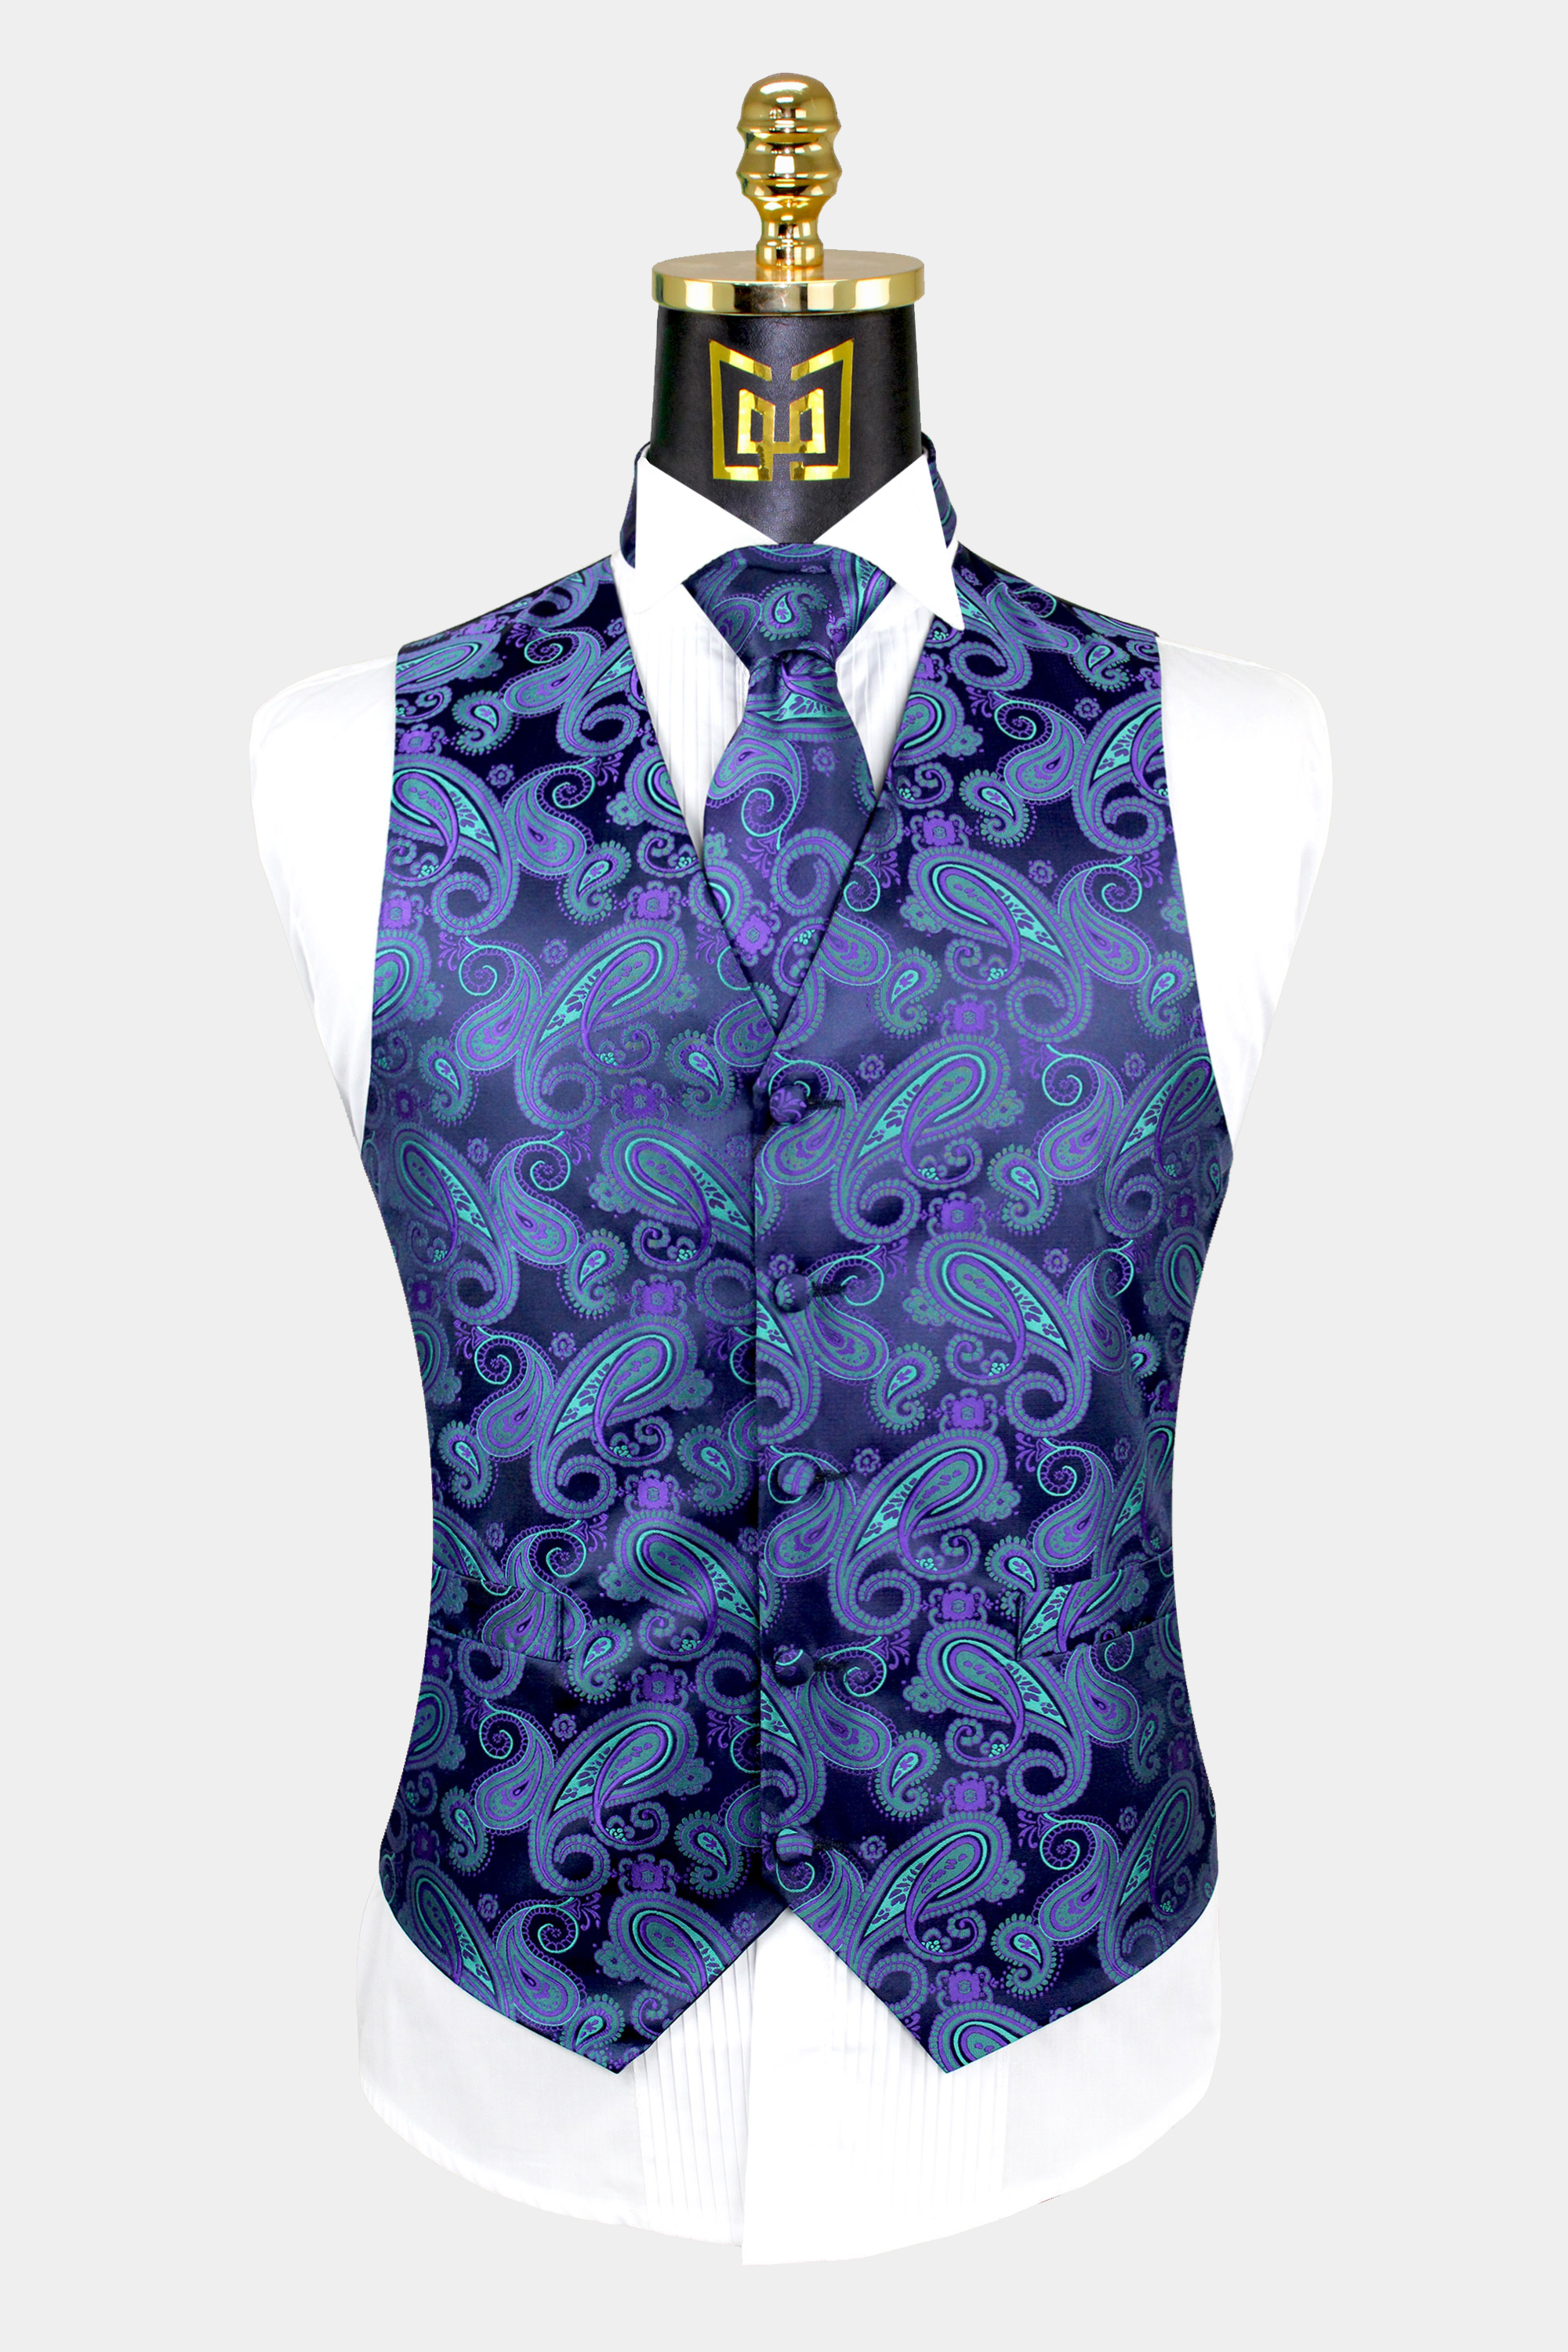 New Men's Formal Vest Tuxedo Waistcoat_2.5" necktie set paisley prom Burgundy 